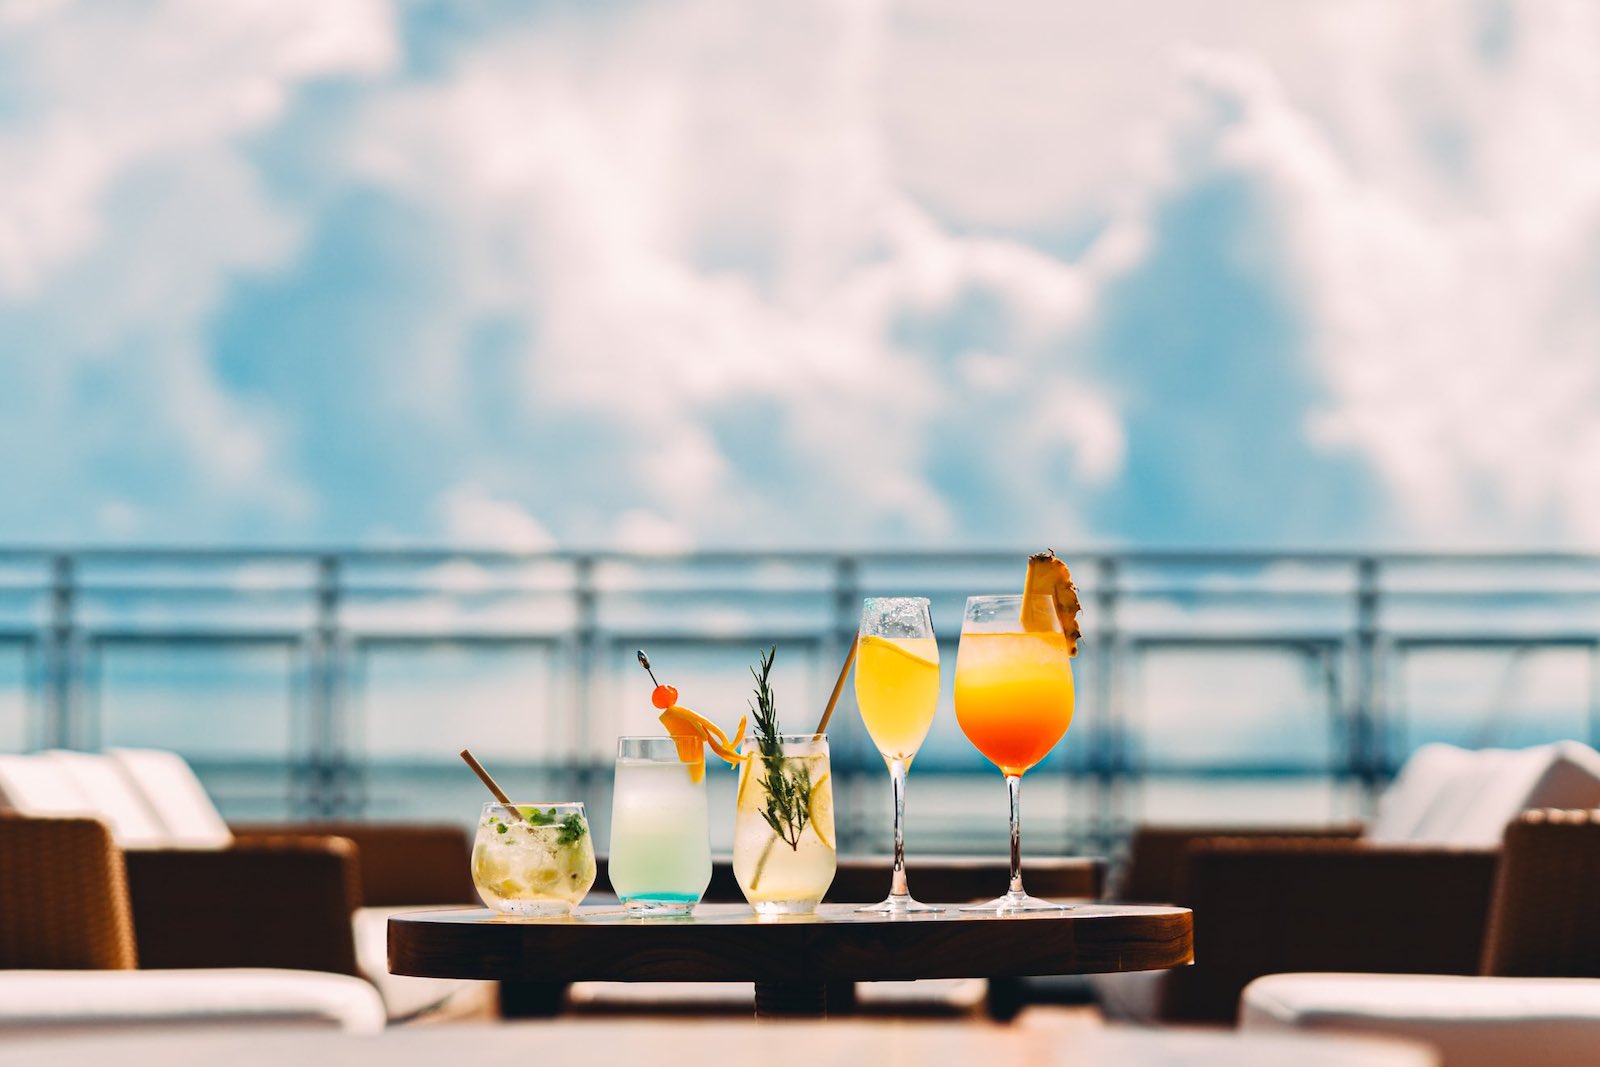 THIRD石垣島はホテル内での飲食代がすべて宿泊料金に含まれる「オールインクルーシブステイ」を導入している